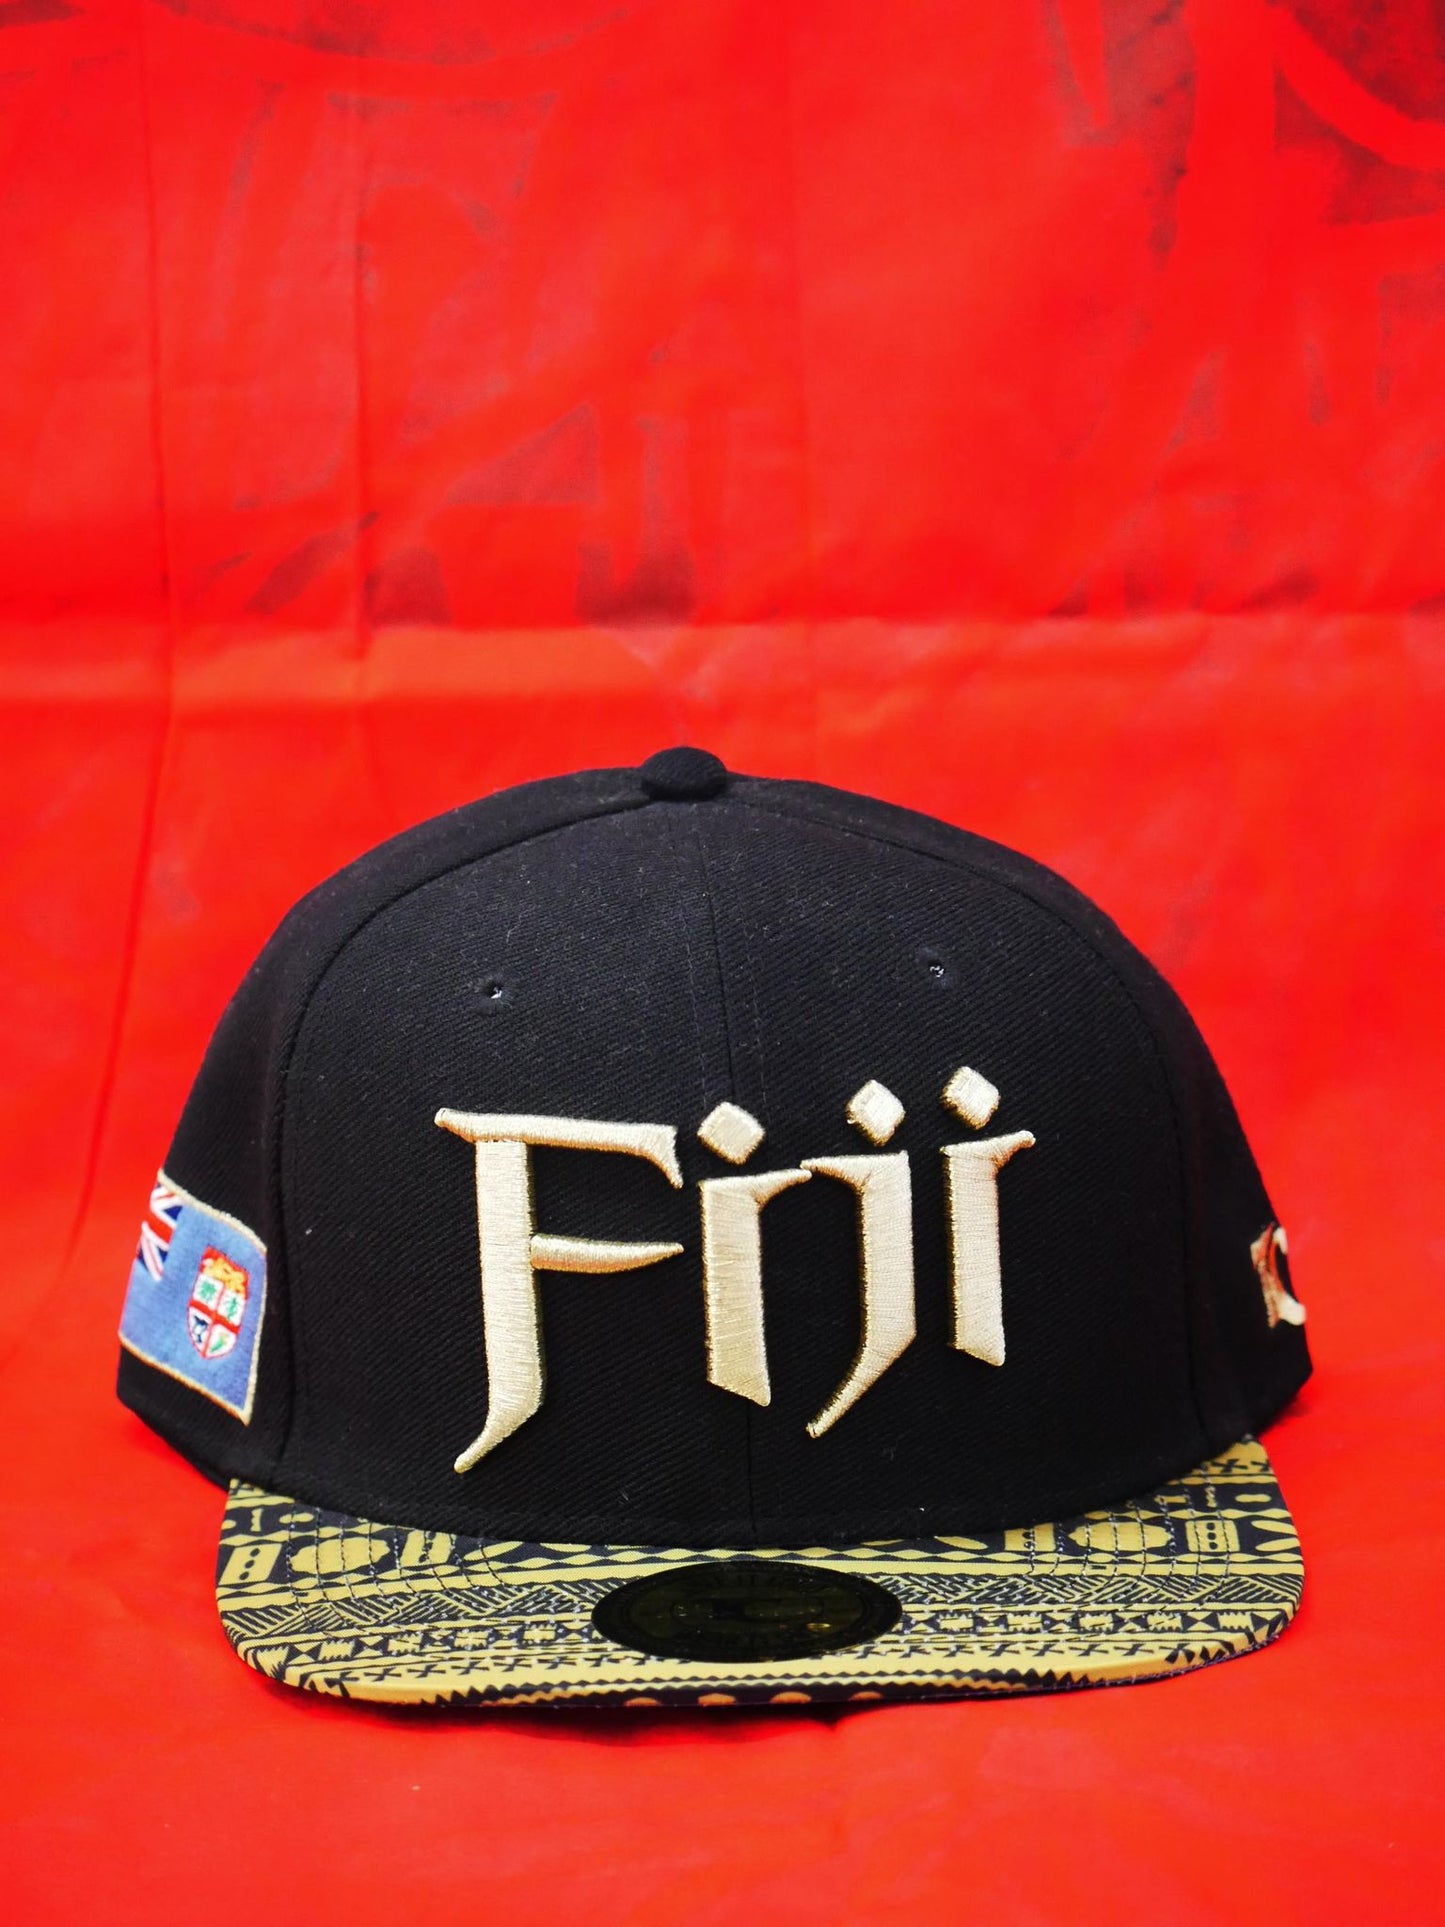 Tuff Kokonut's "Fiji" Snapback (Black & Gold)